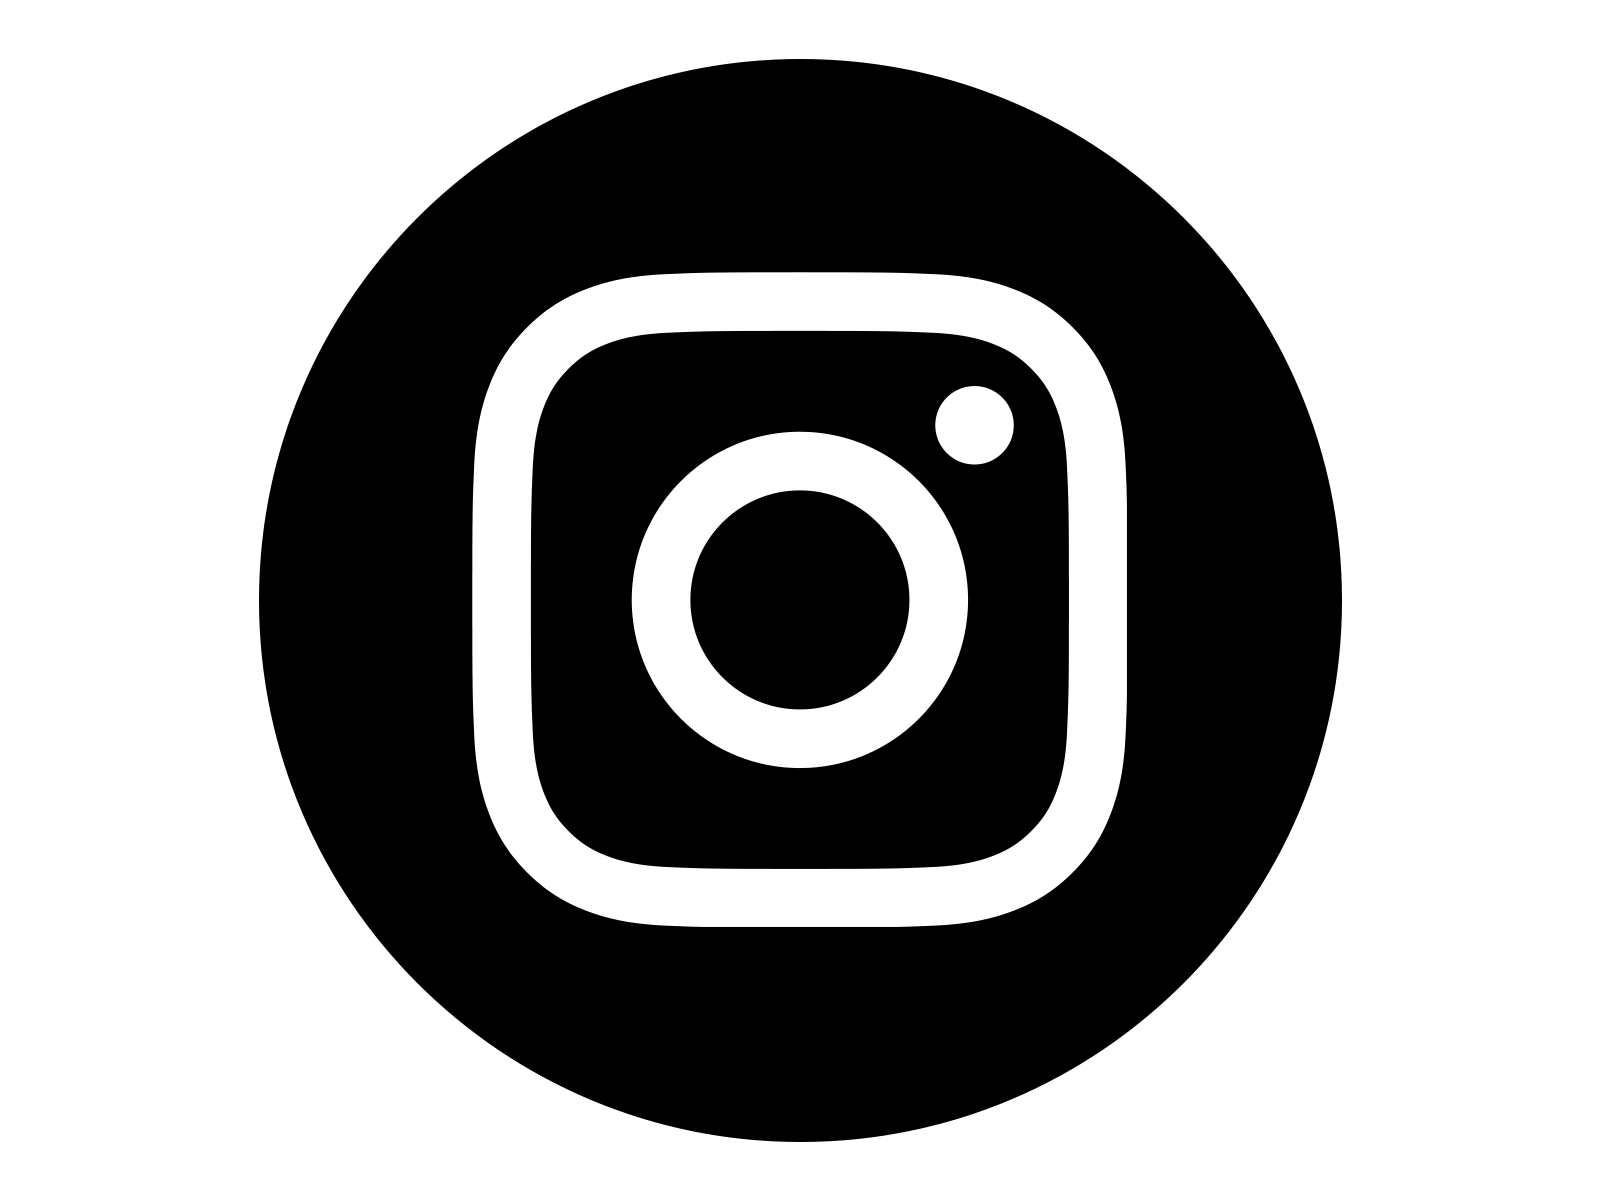 instagram-icon-white-on-black-circle.png, 32kB